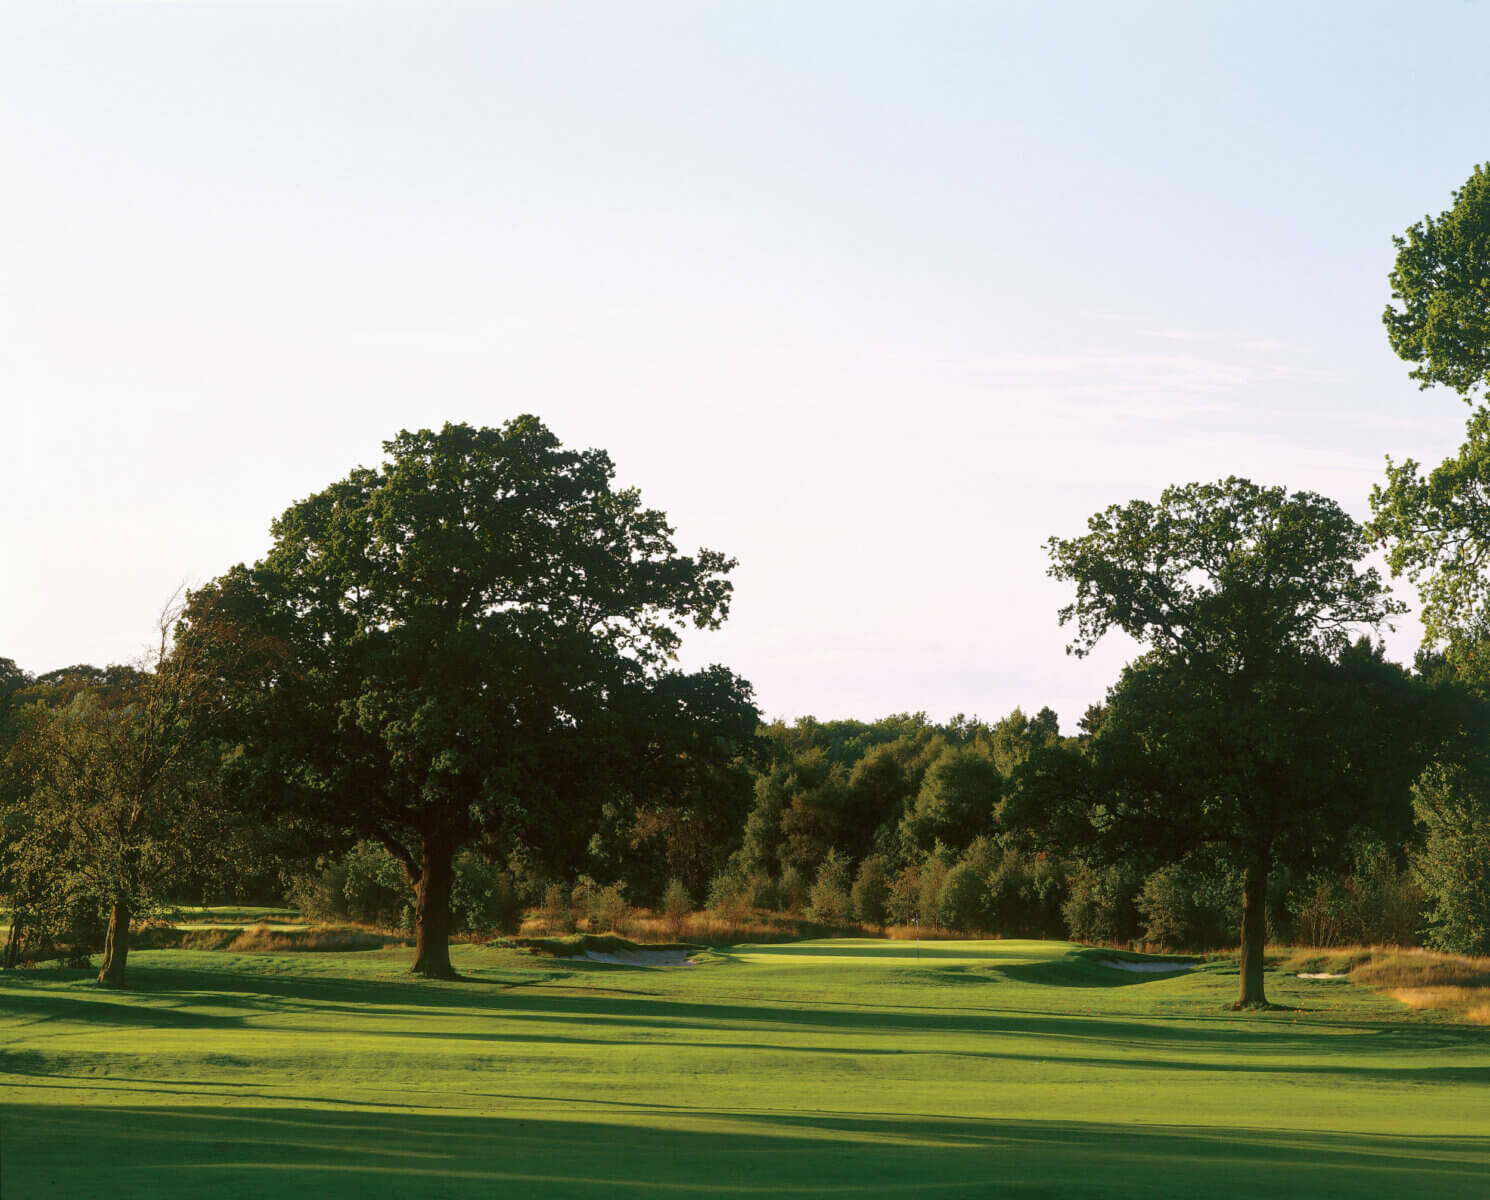 Large trees create shadows on the golf course at dusk, Duke's Golf Club, St Andrews